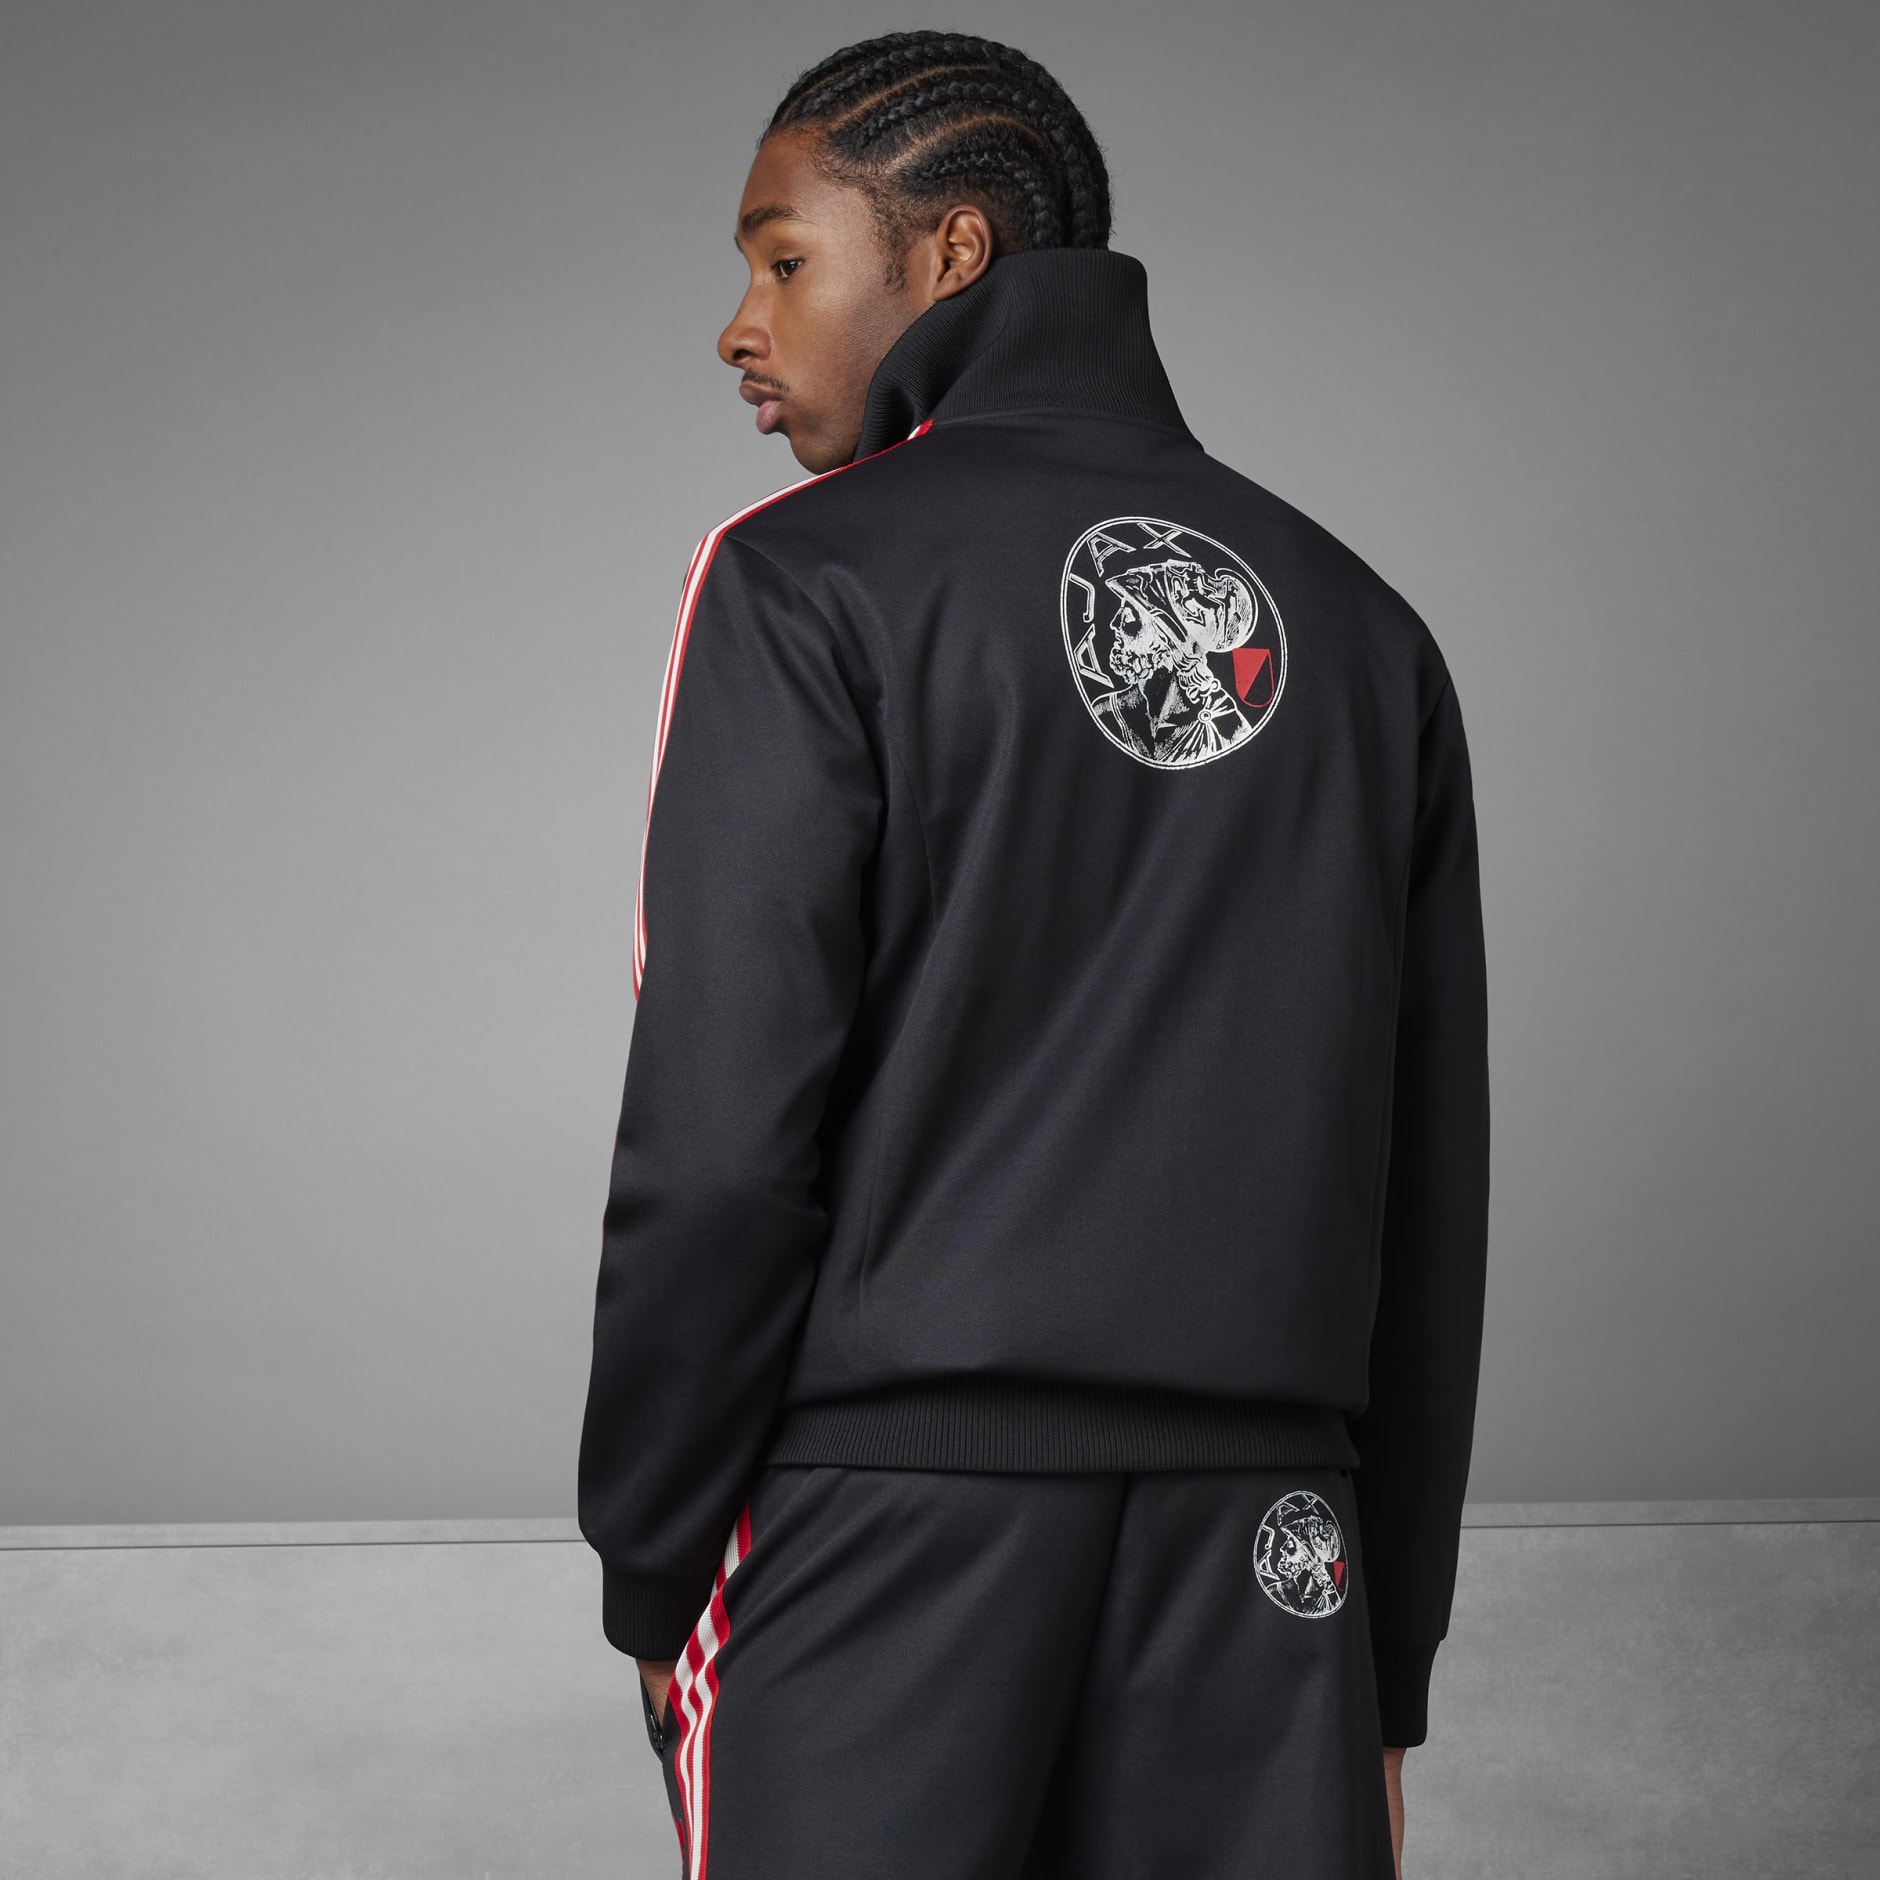 Vijf Openbaren koppeling Men's Clothing - Ajax Amsterdam OG Track Jacket - Black | adidas Kuwait